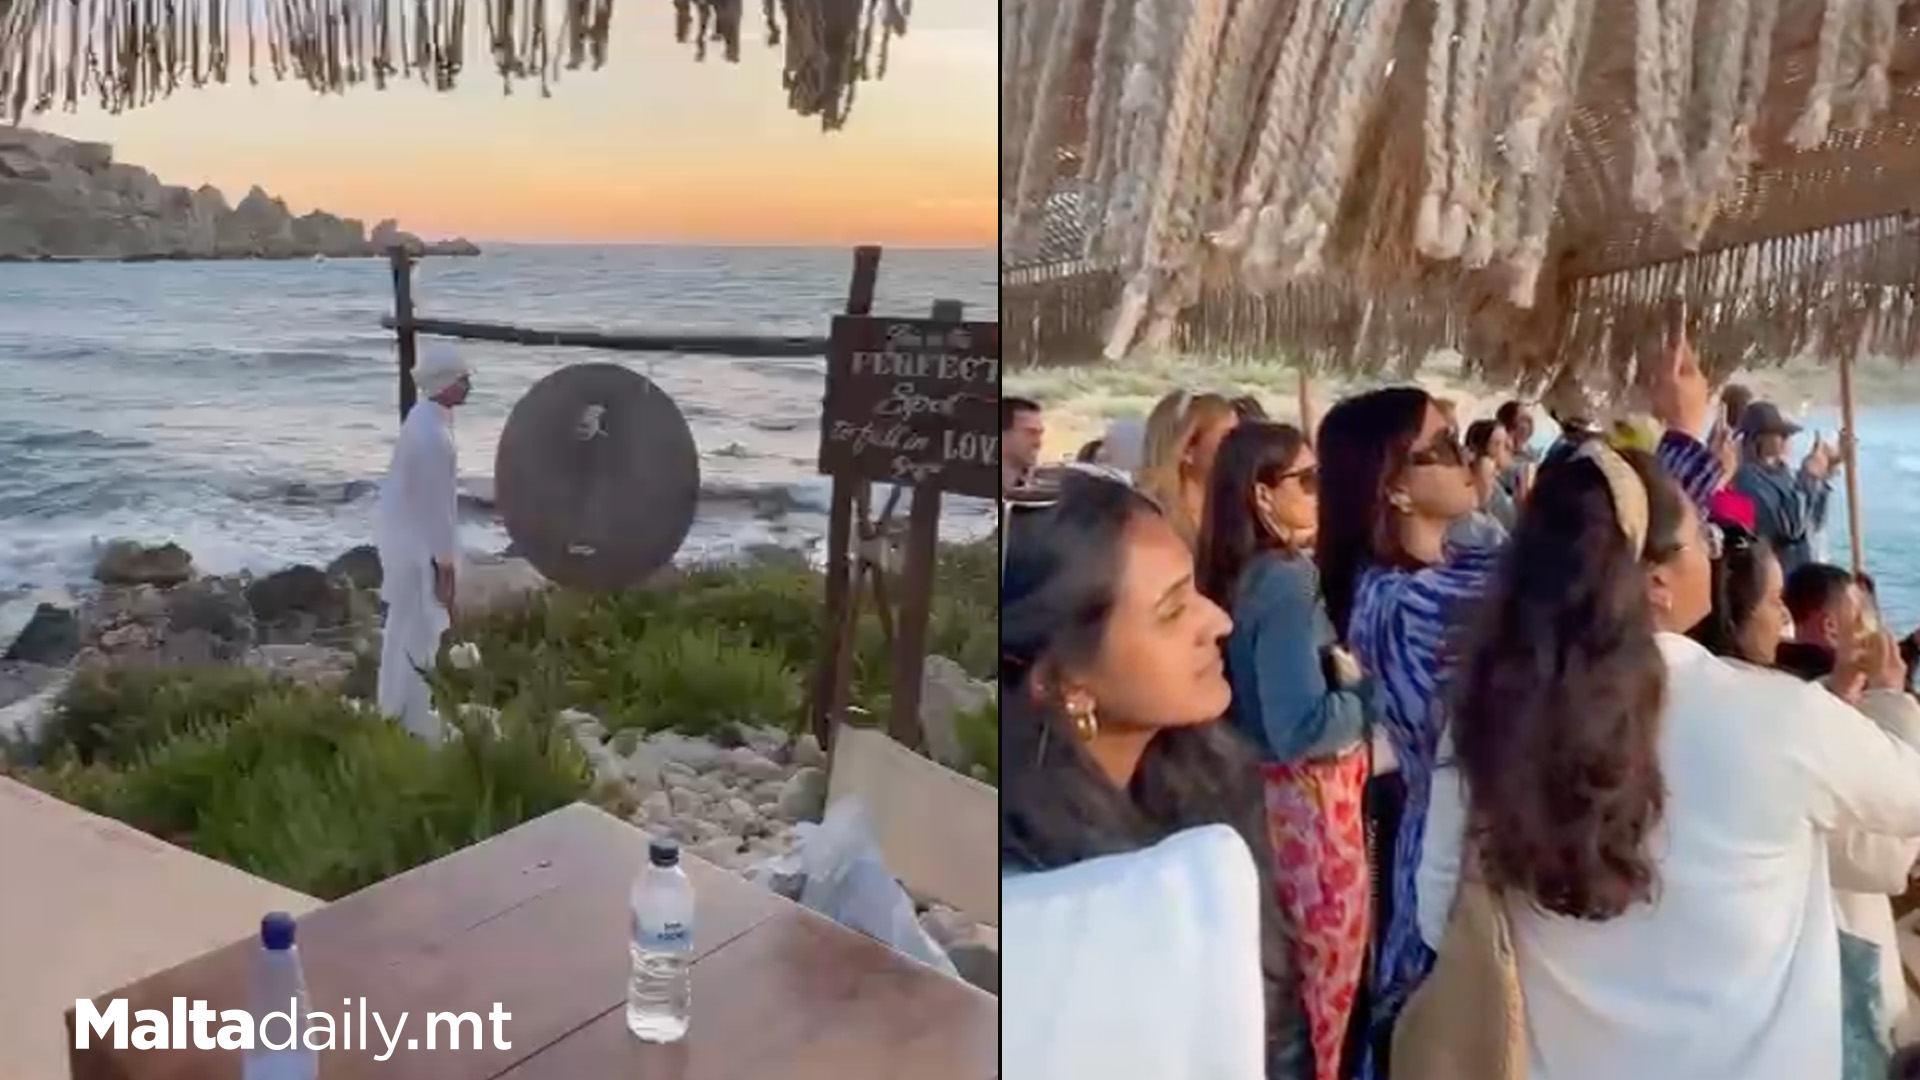 Tourists Flock To Singita Sunset Ritual After Forbes Ranking